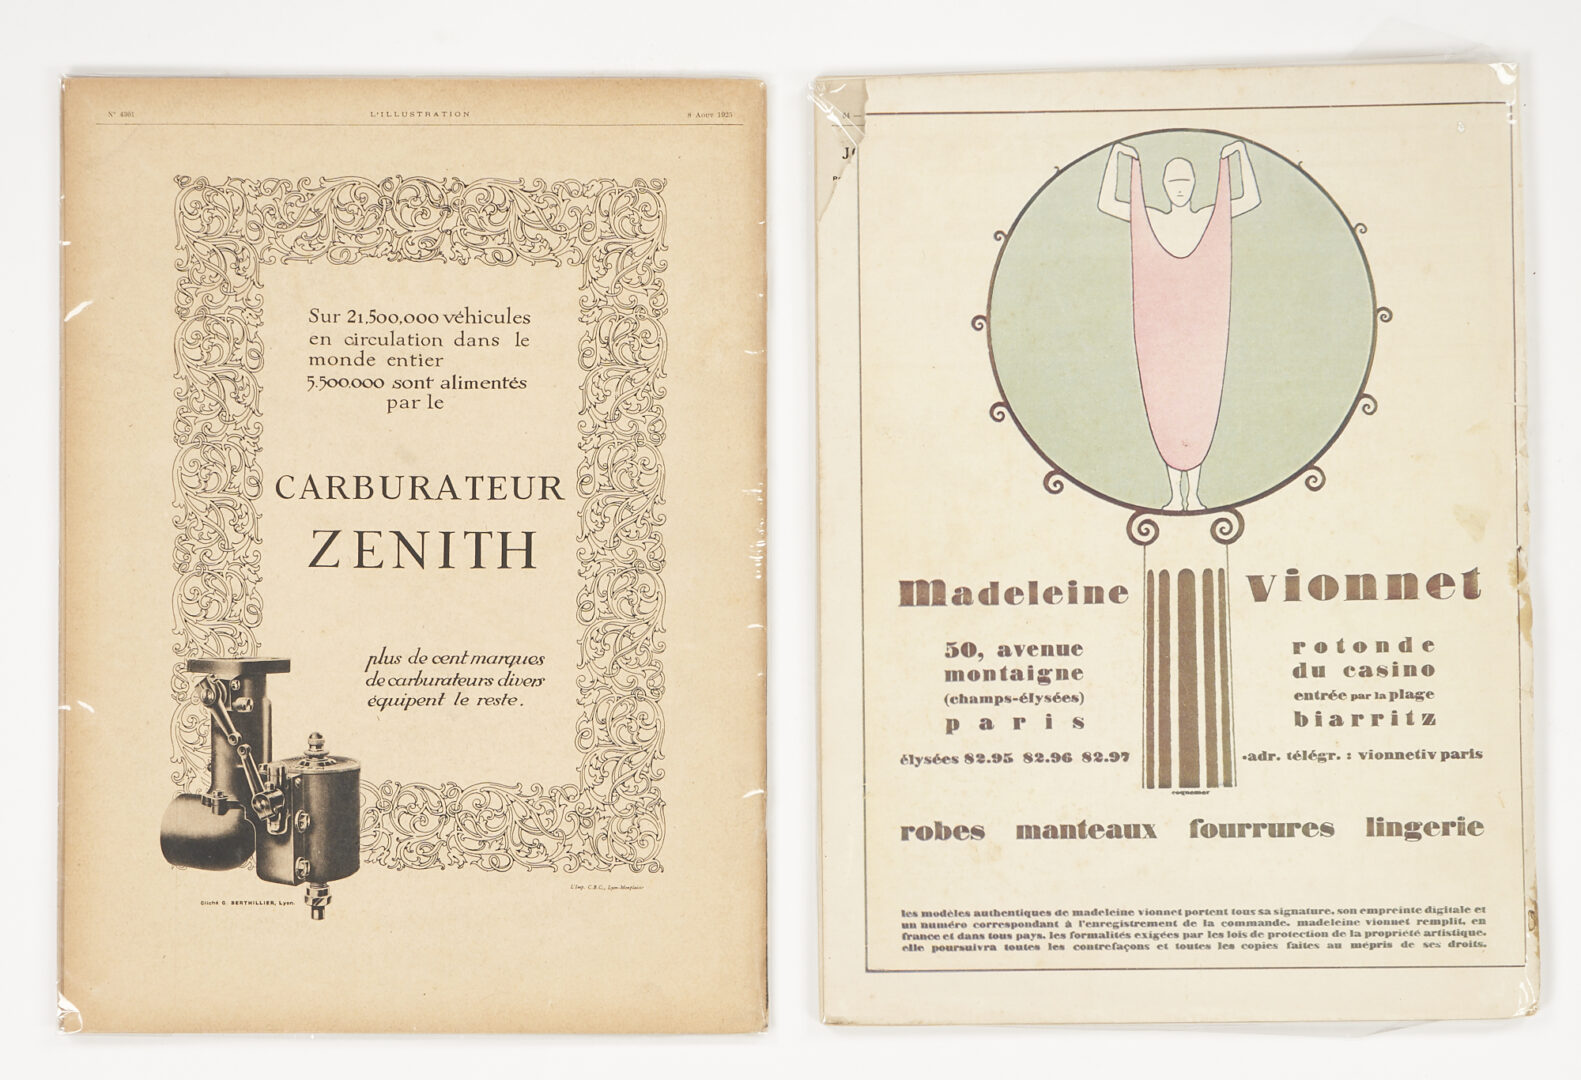 Lot 629: 6 pcs. 1925 Paris Exposition Ephemera, incl. Magazines